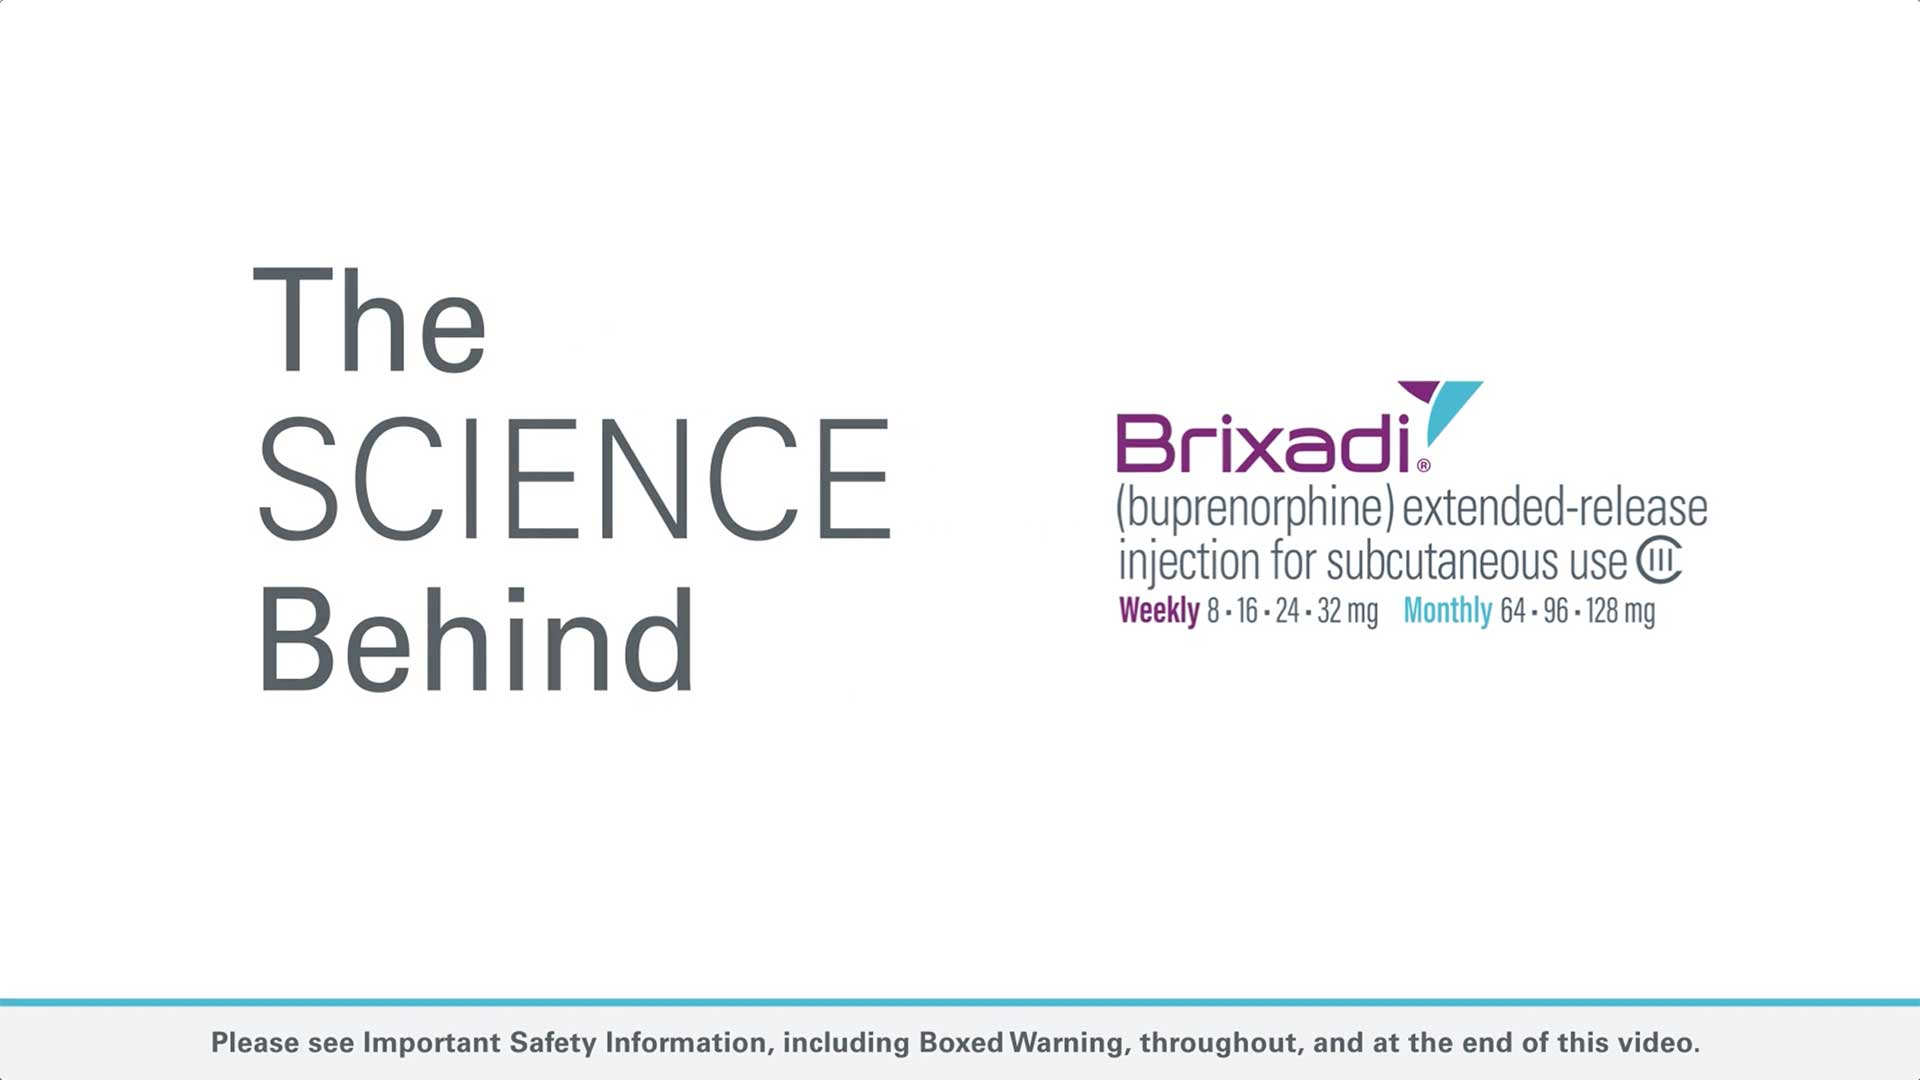 Video of the science behind BRIXADI